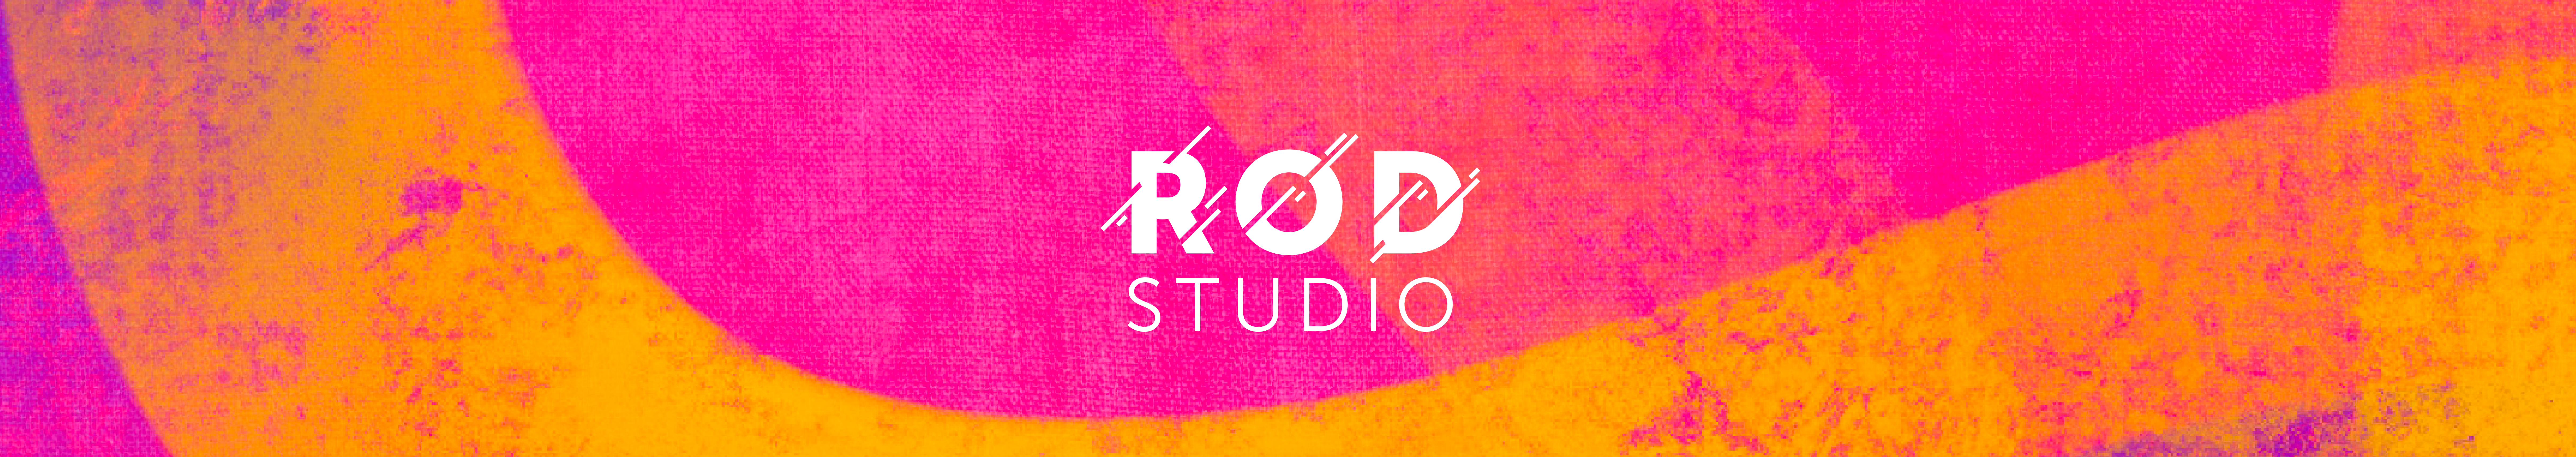 Rod Studios profilbanner